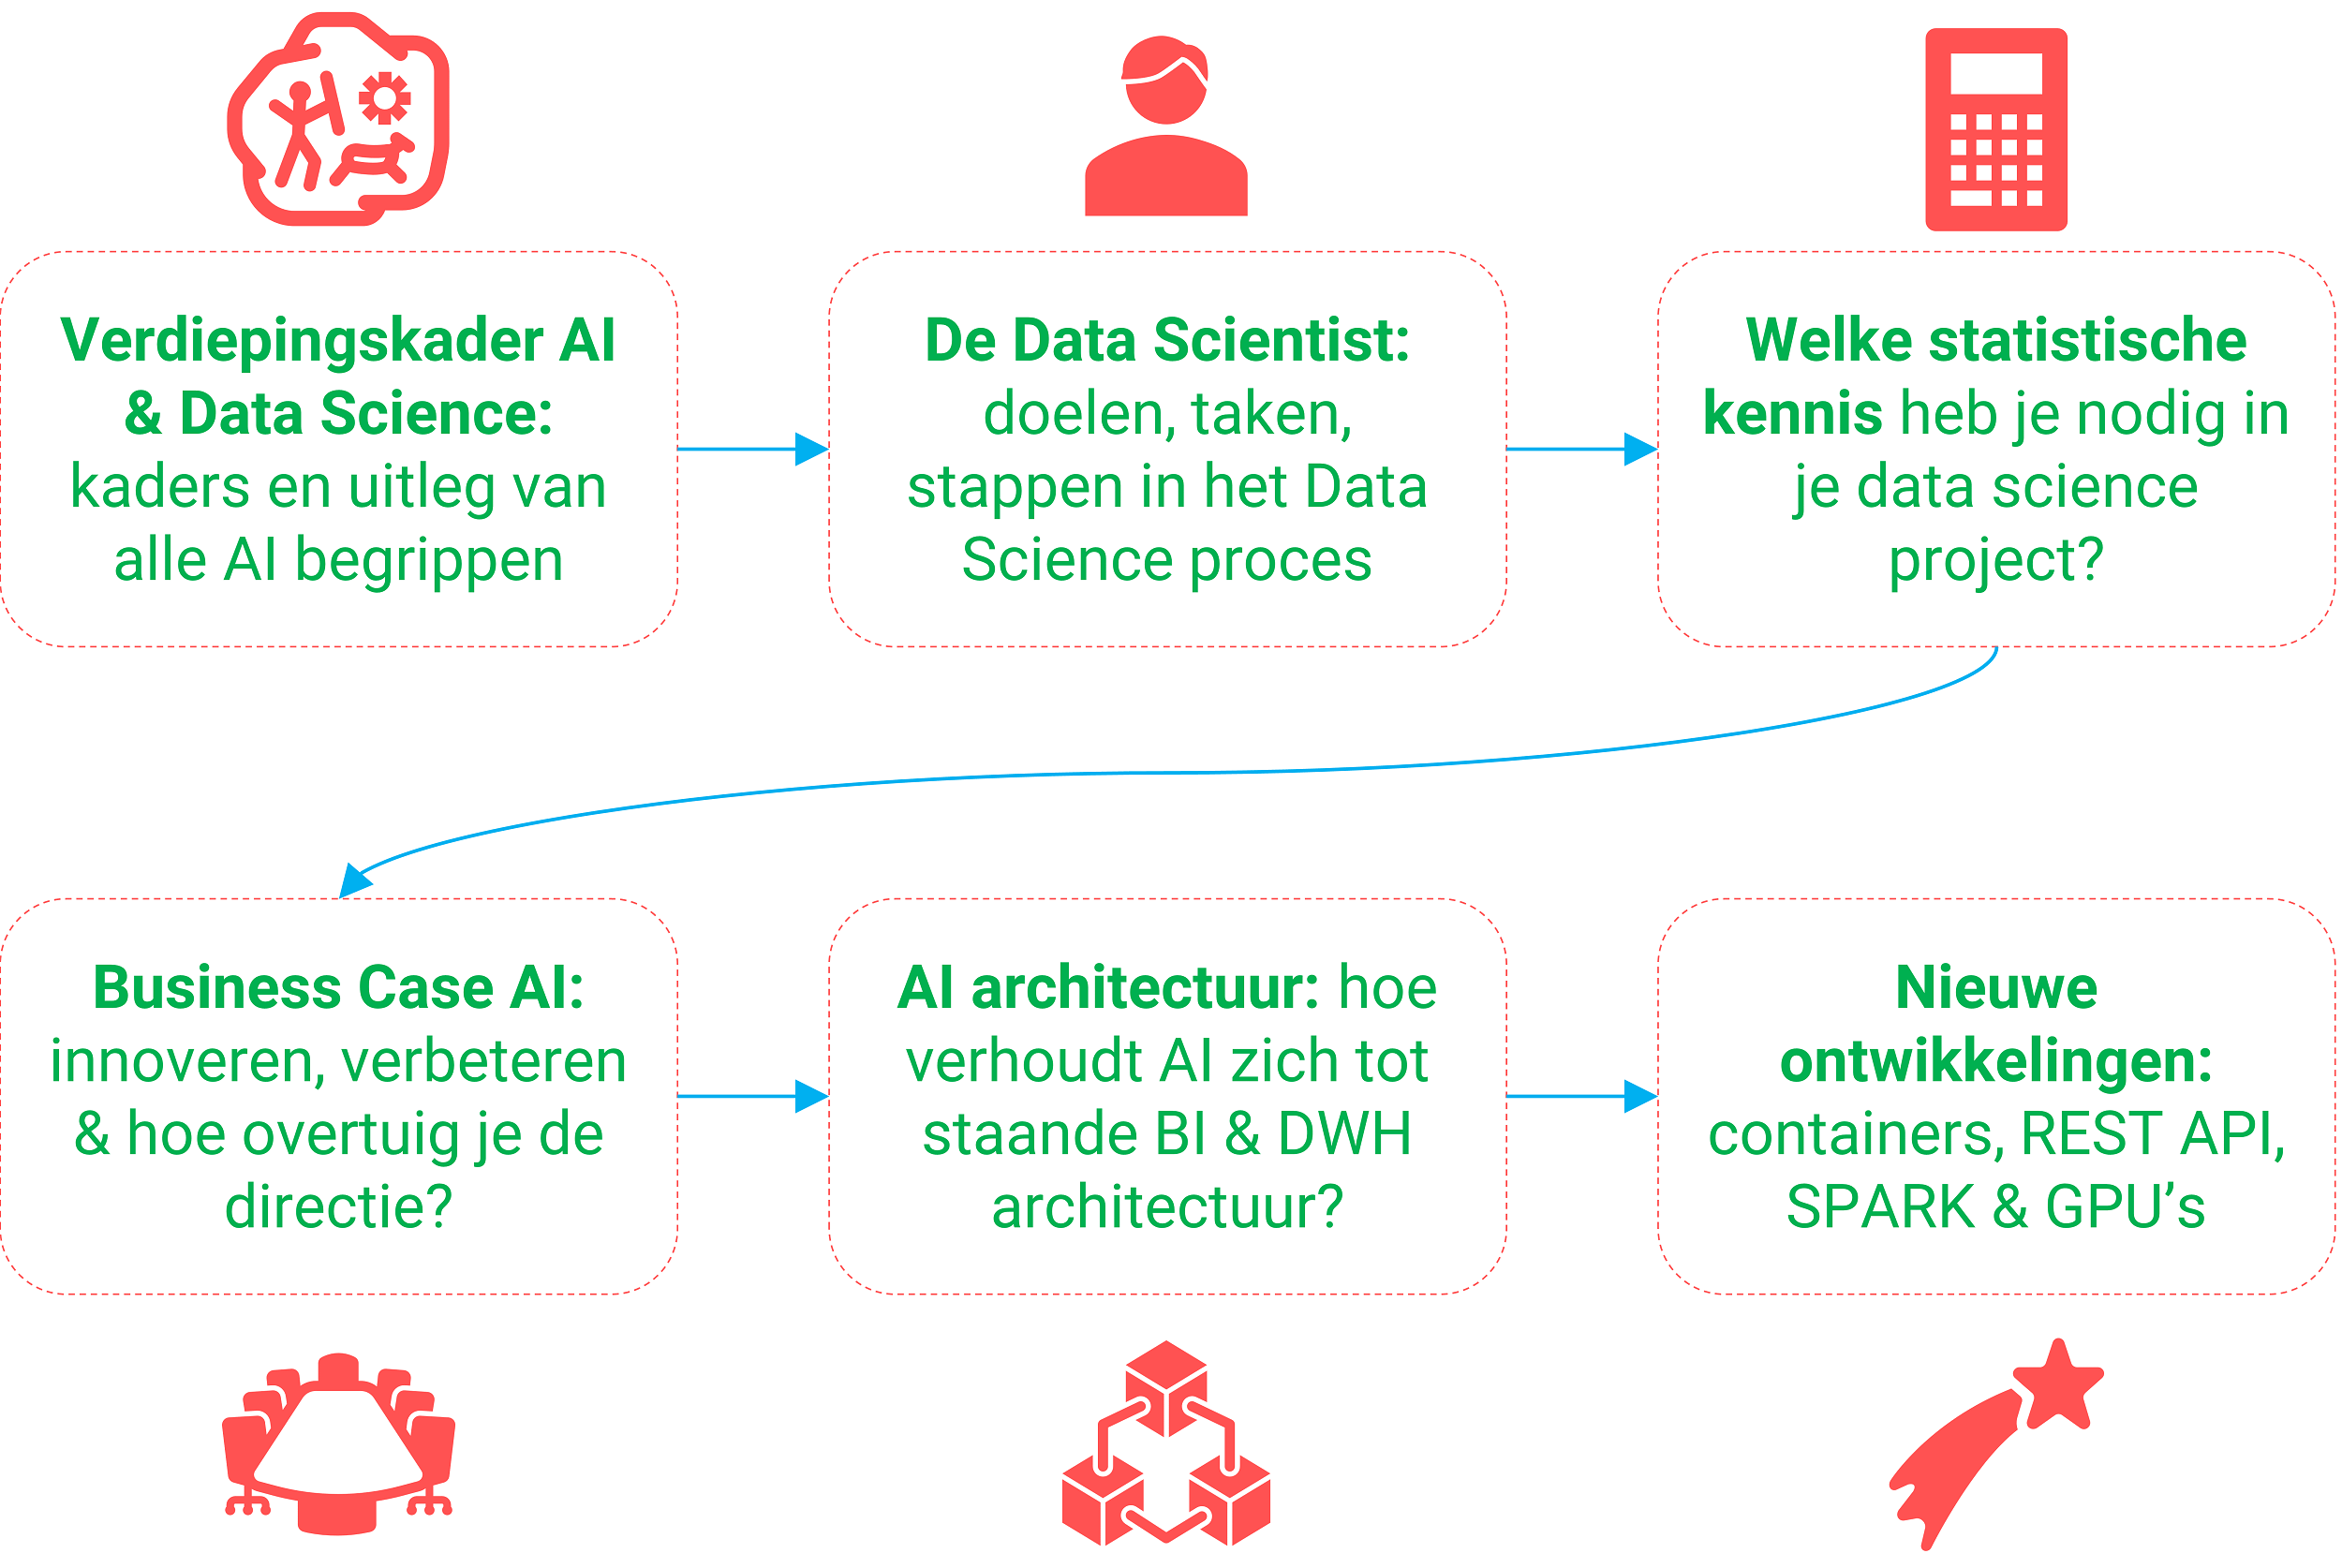 DAG 6: Het ontwikkelen van AI, machine learning & AI-architectuur